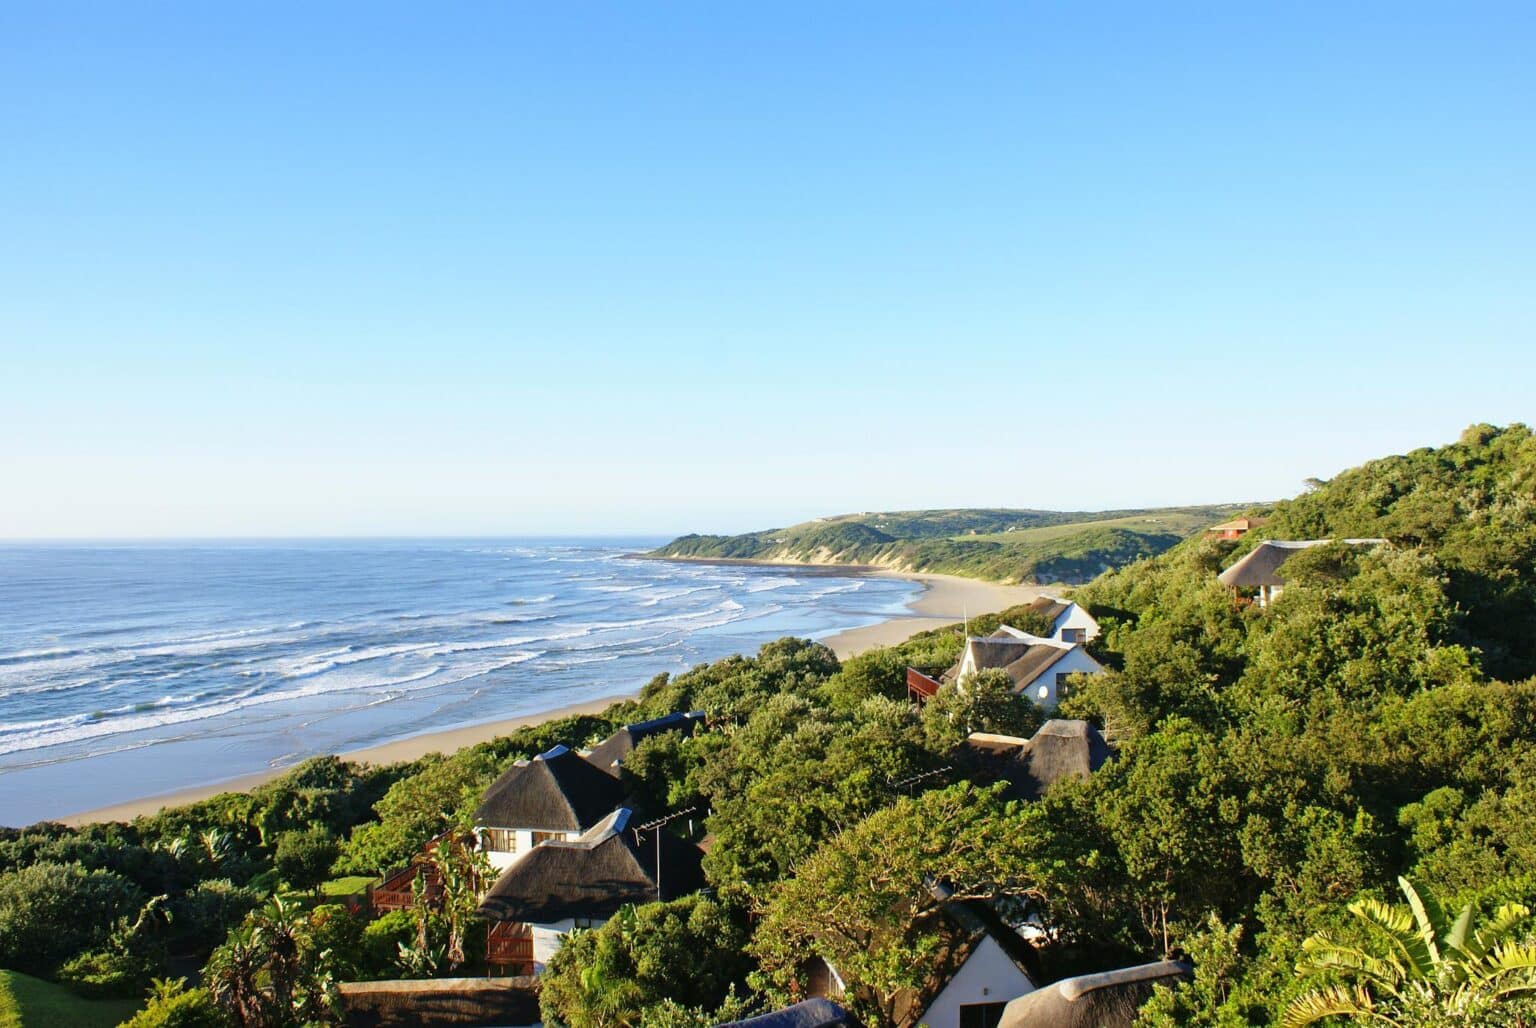 Landscape view of coastal town Cintsa, Wild Coast, South Africa